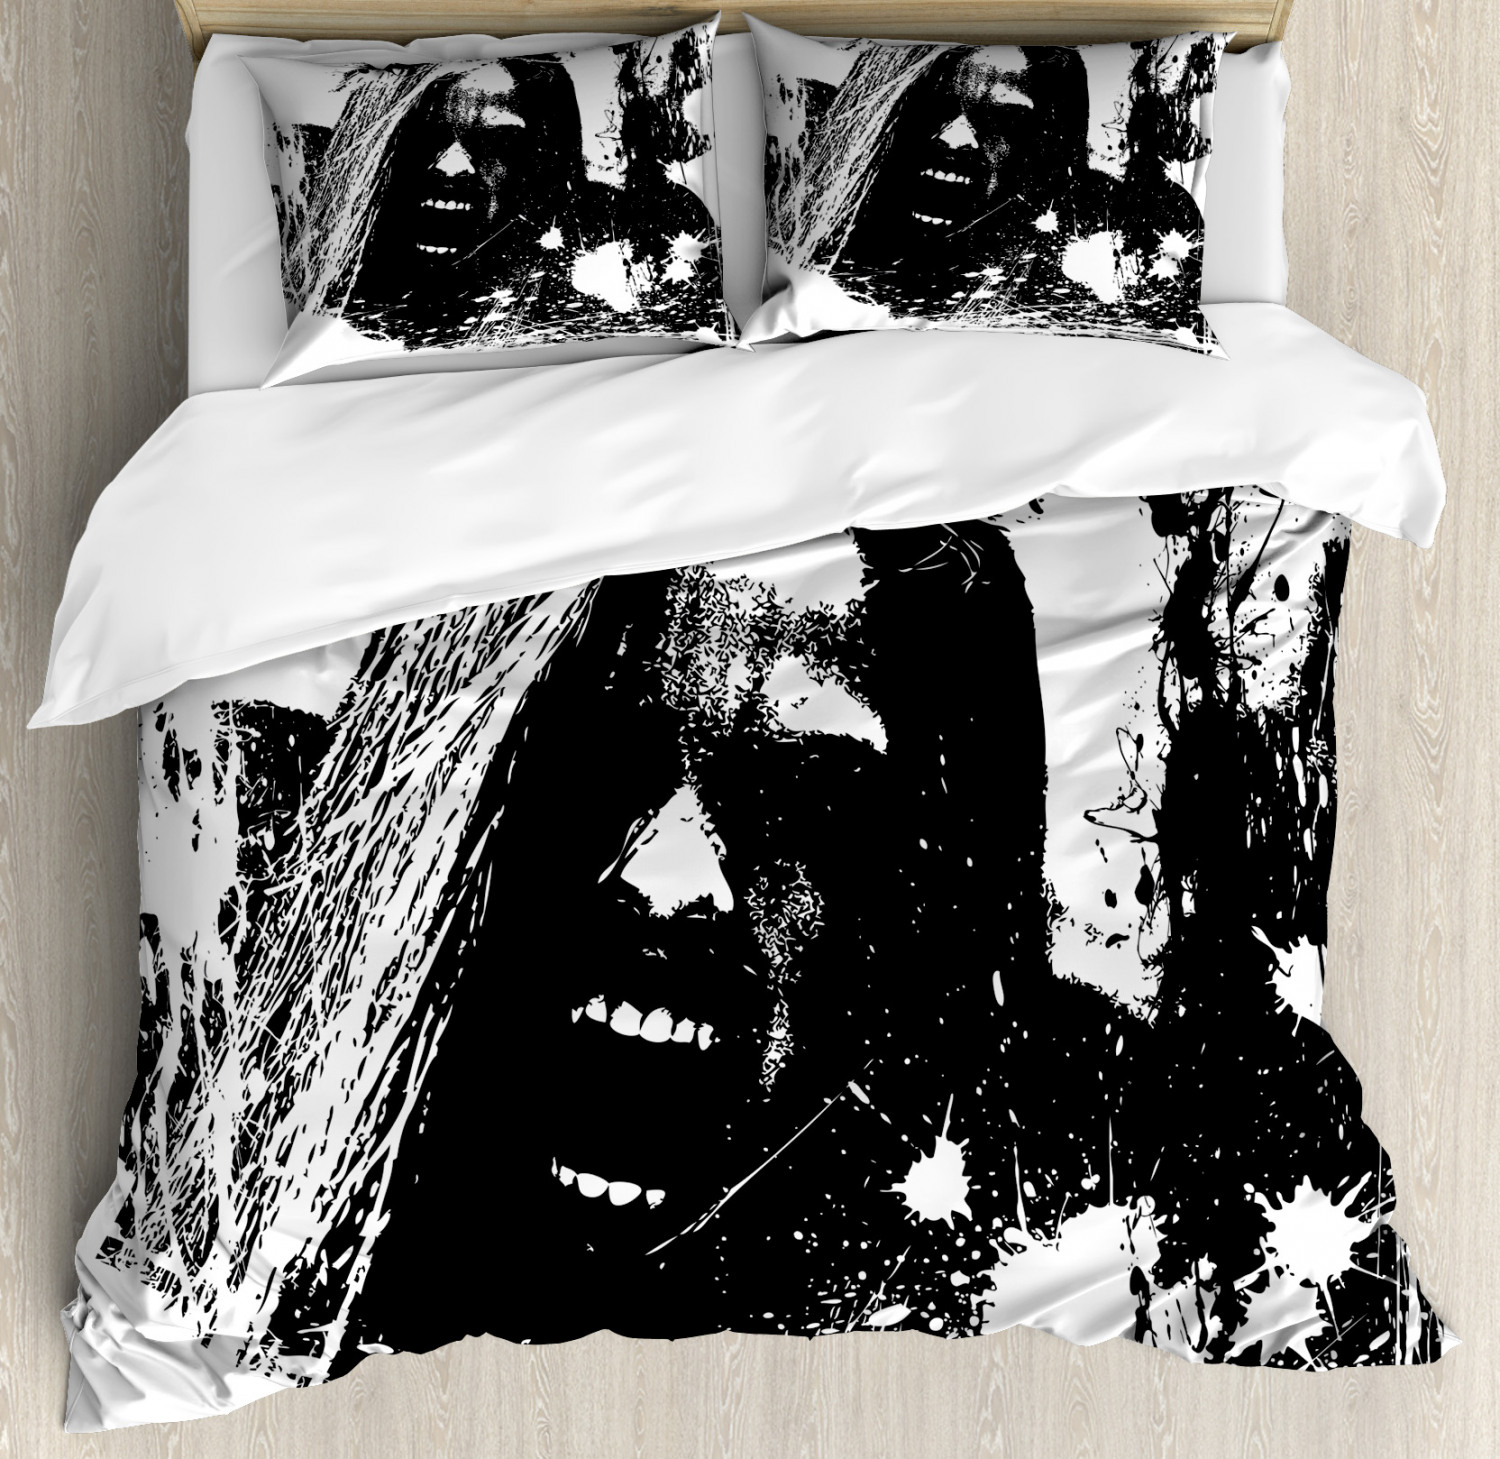 Zombie Duvet Cover Set With Pillow Shams Crazy Man Horror Print Ebay